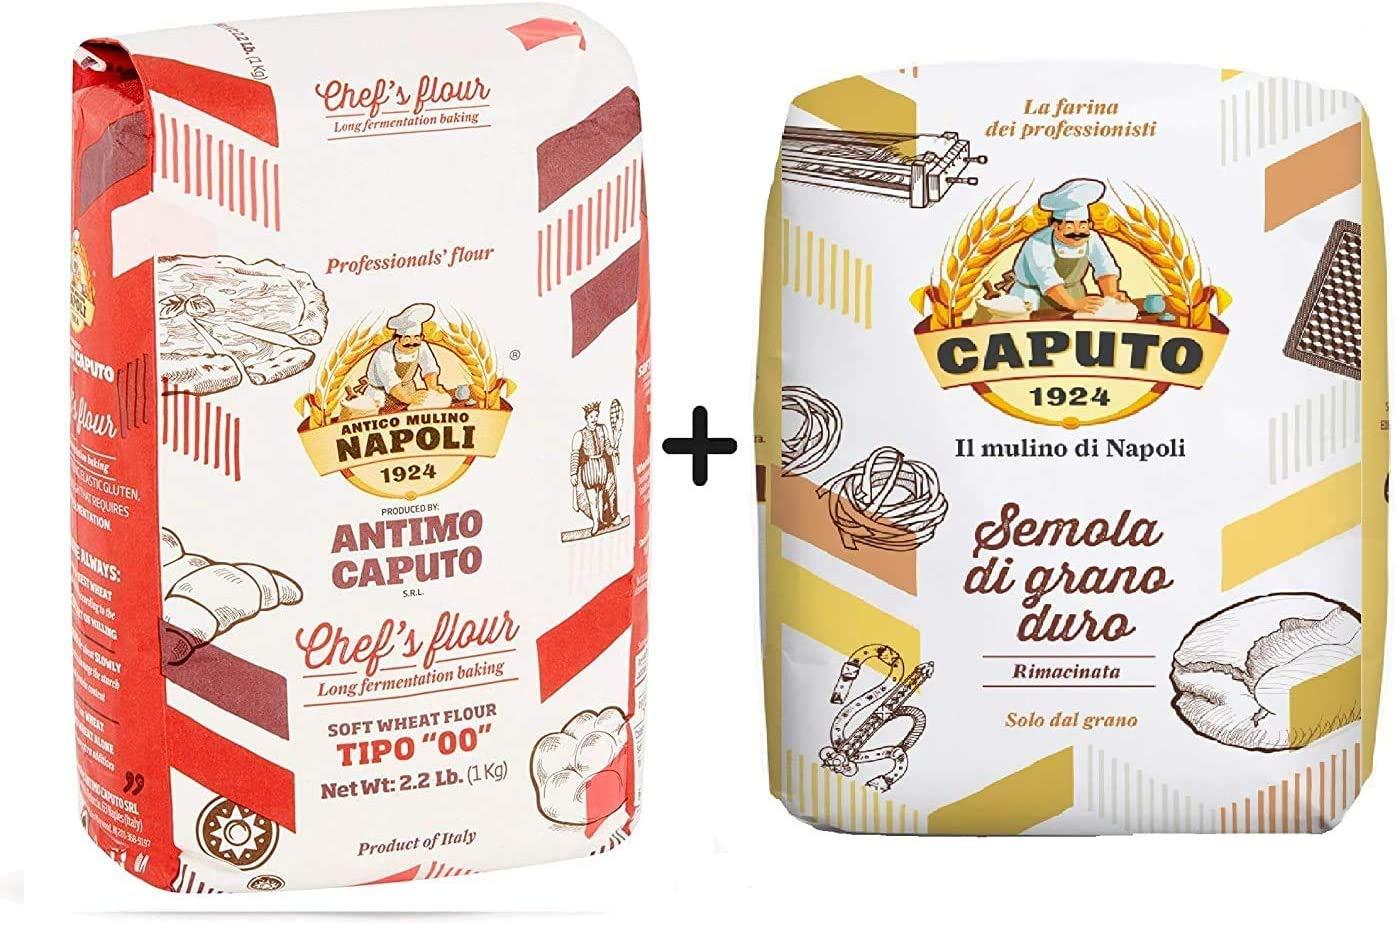 Antimo Caputo “00 Chef's Flour 1 kilo